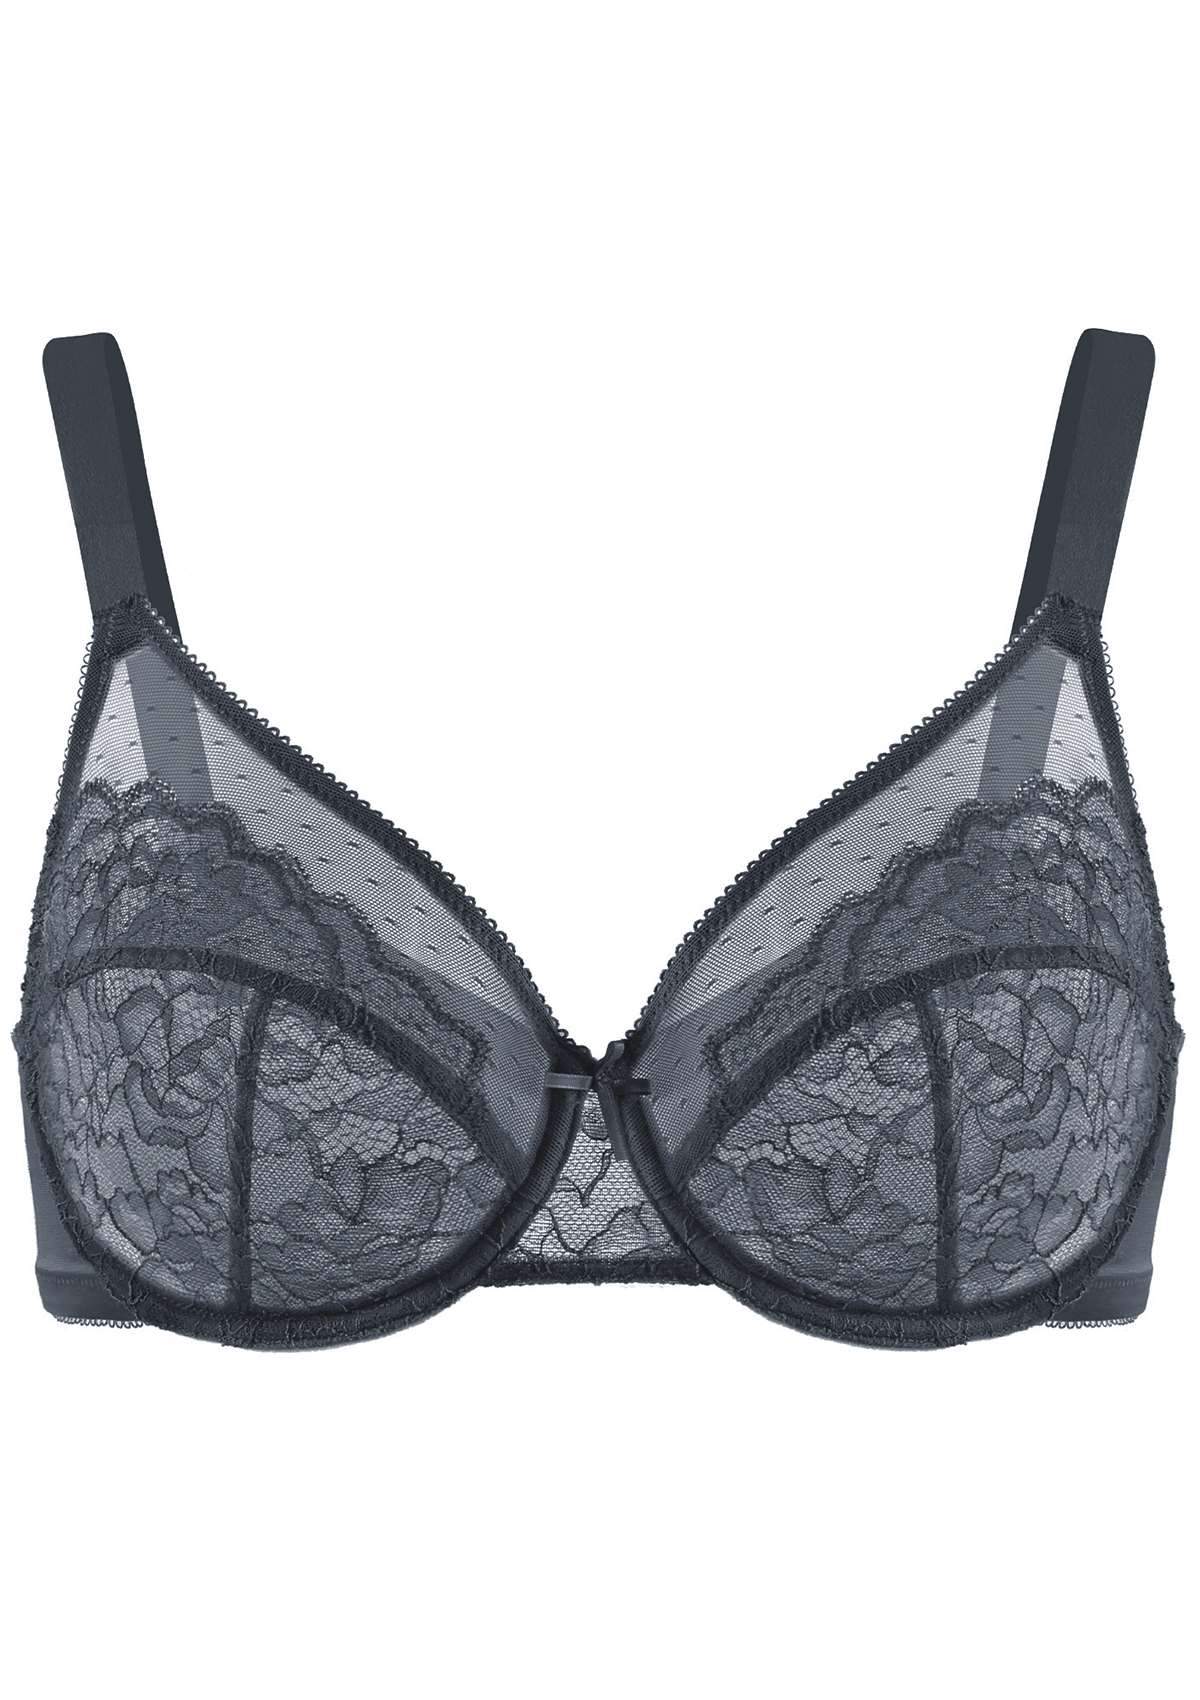 HSIA Enchante Matching Bra And Underwear Sets: Uplift Big Boobs Bra - Dark Gray / 44 / C